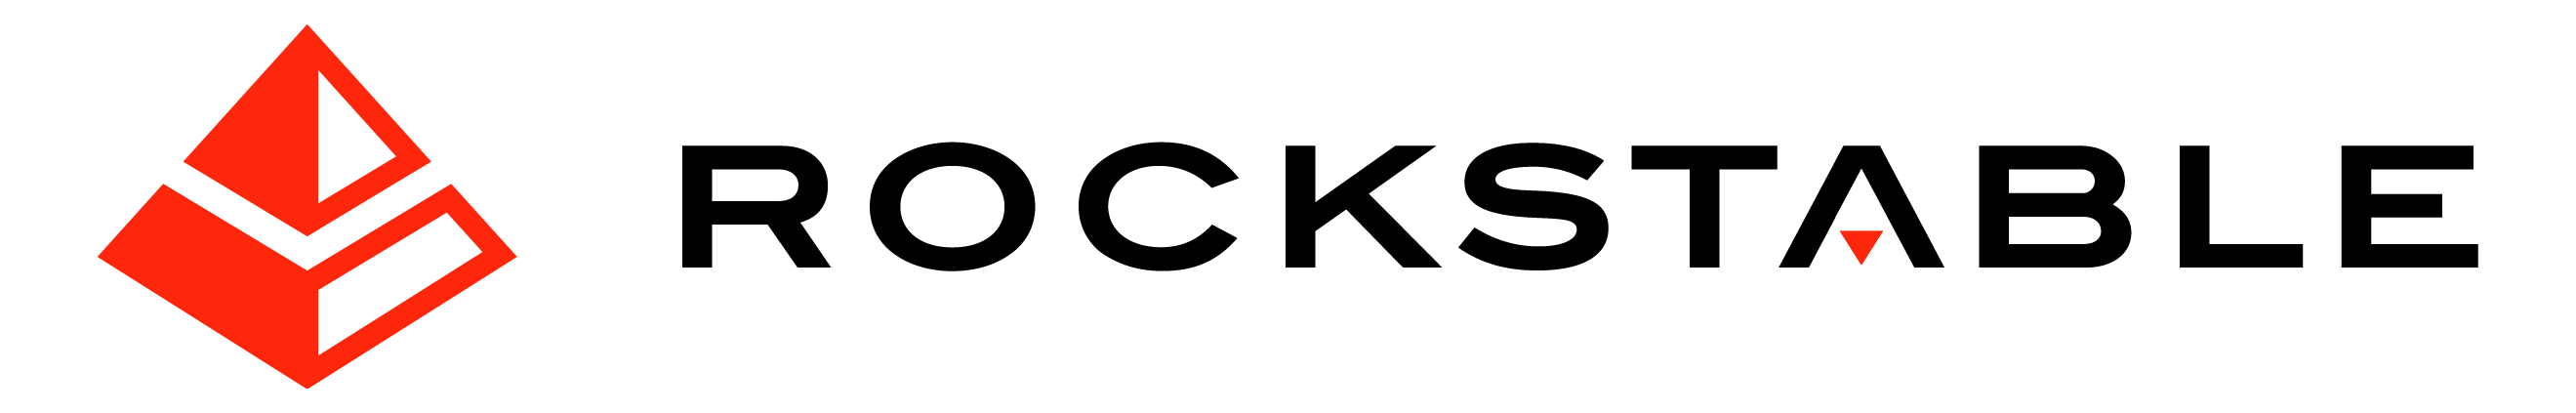 Rockstable Logo Horizontal